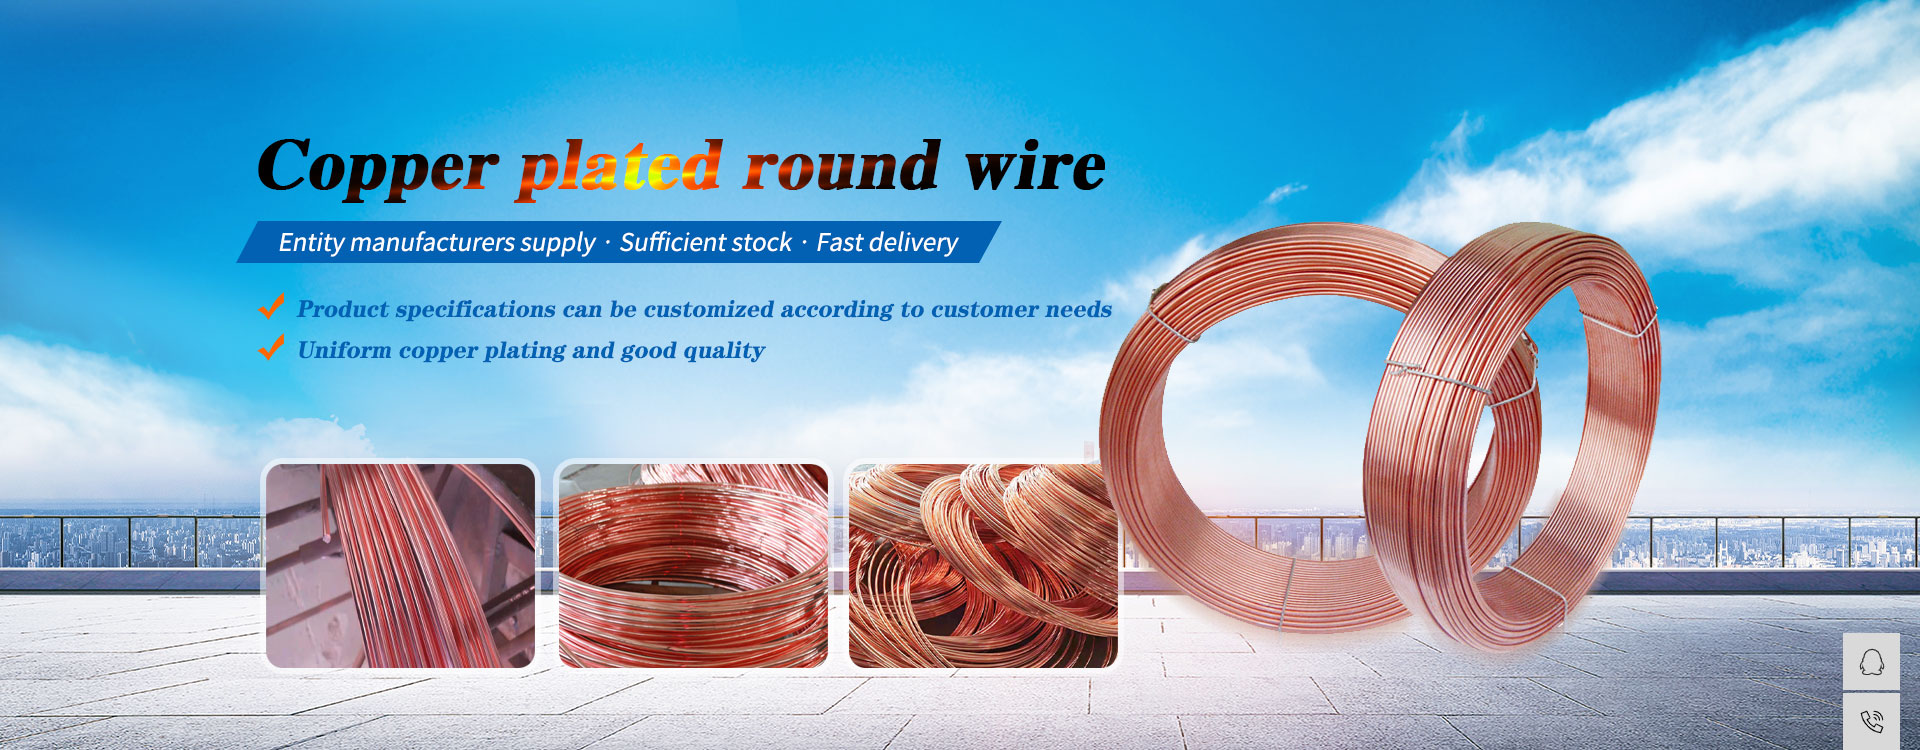 Copper plated round wire